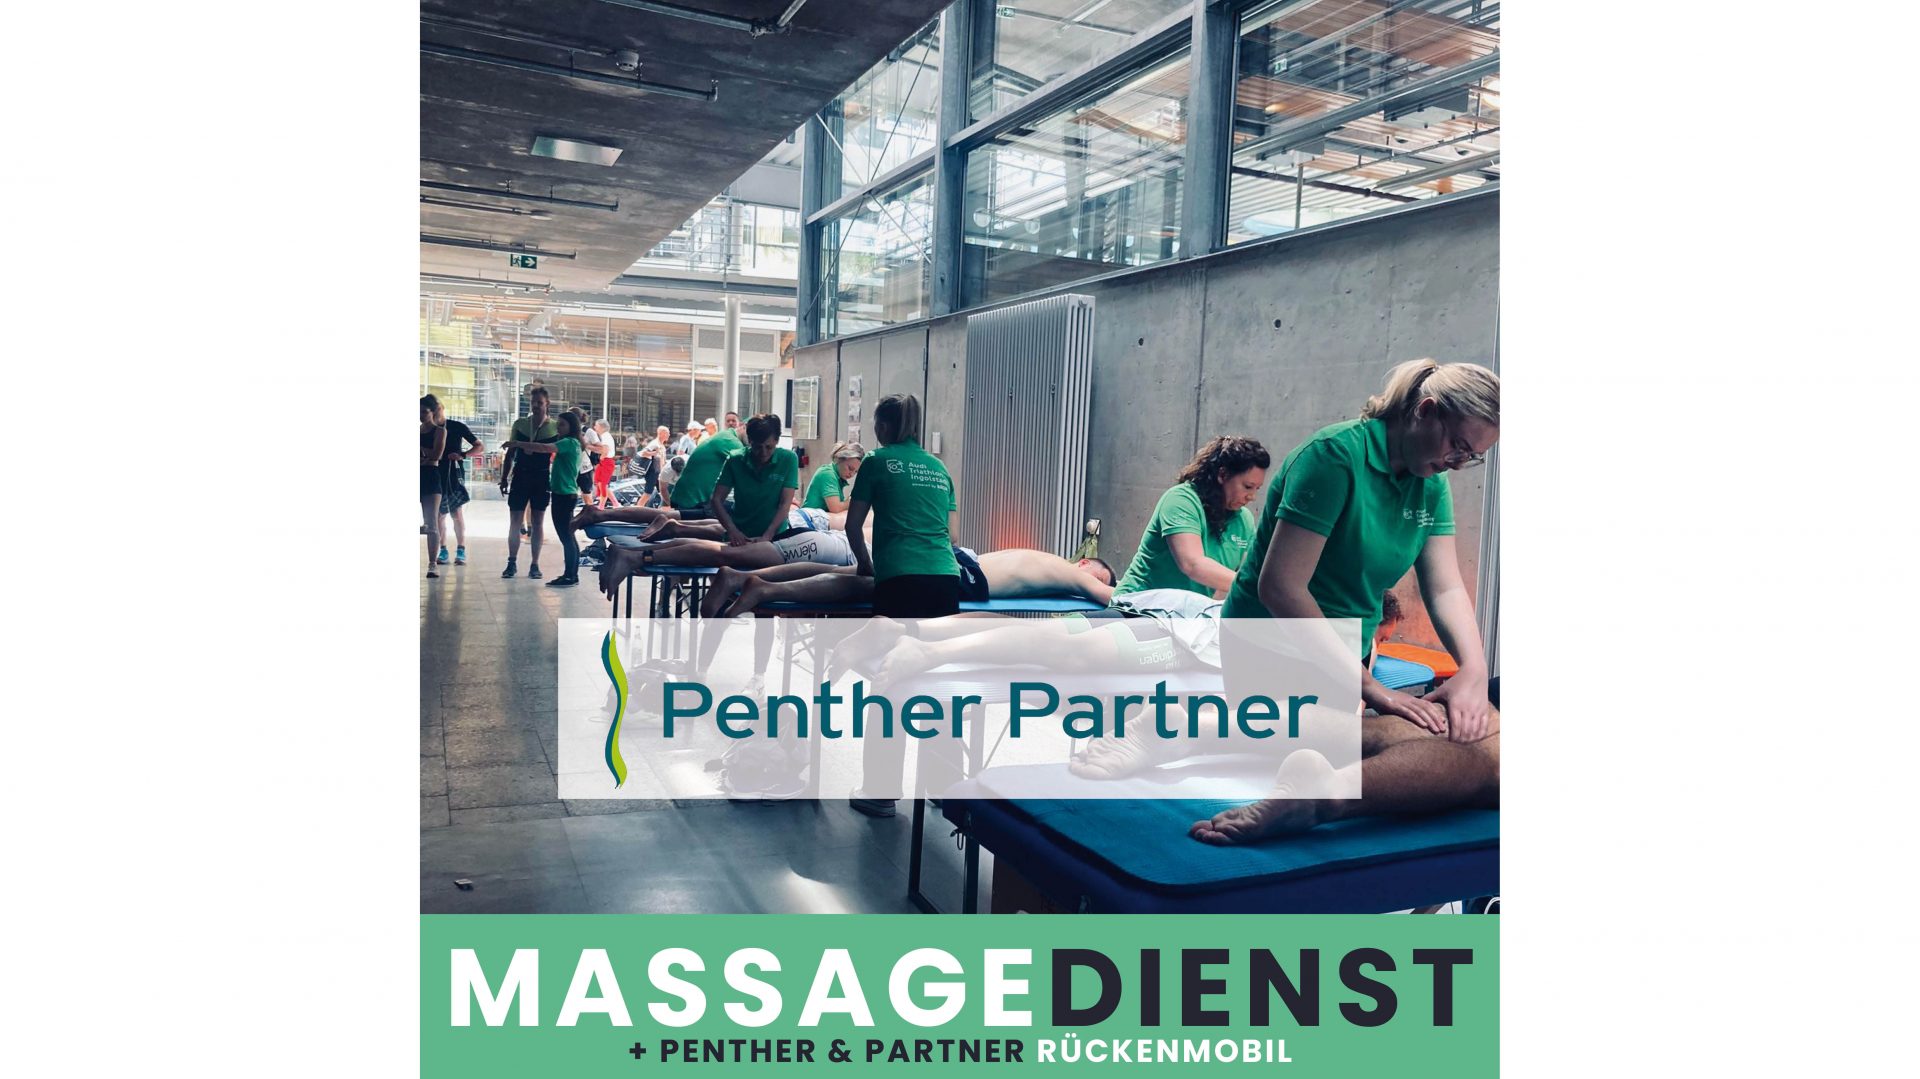 Penther & Partner Massagedienst am RaceDay